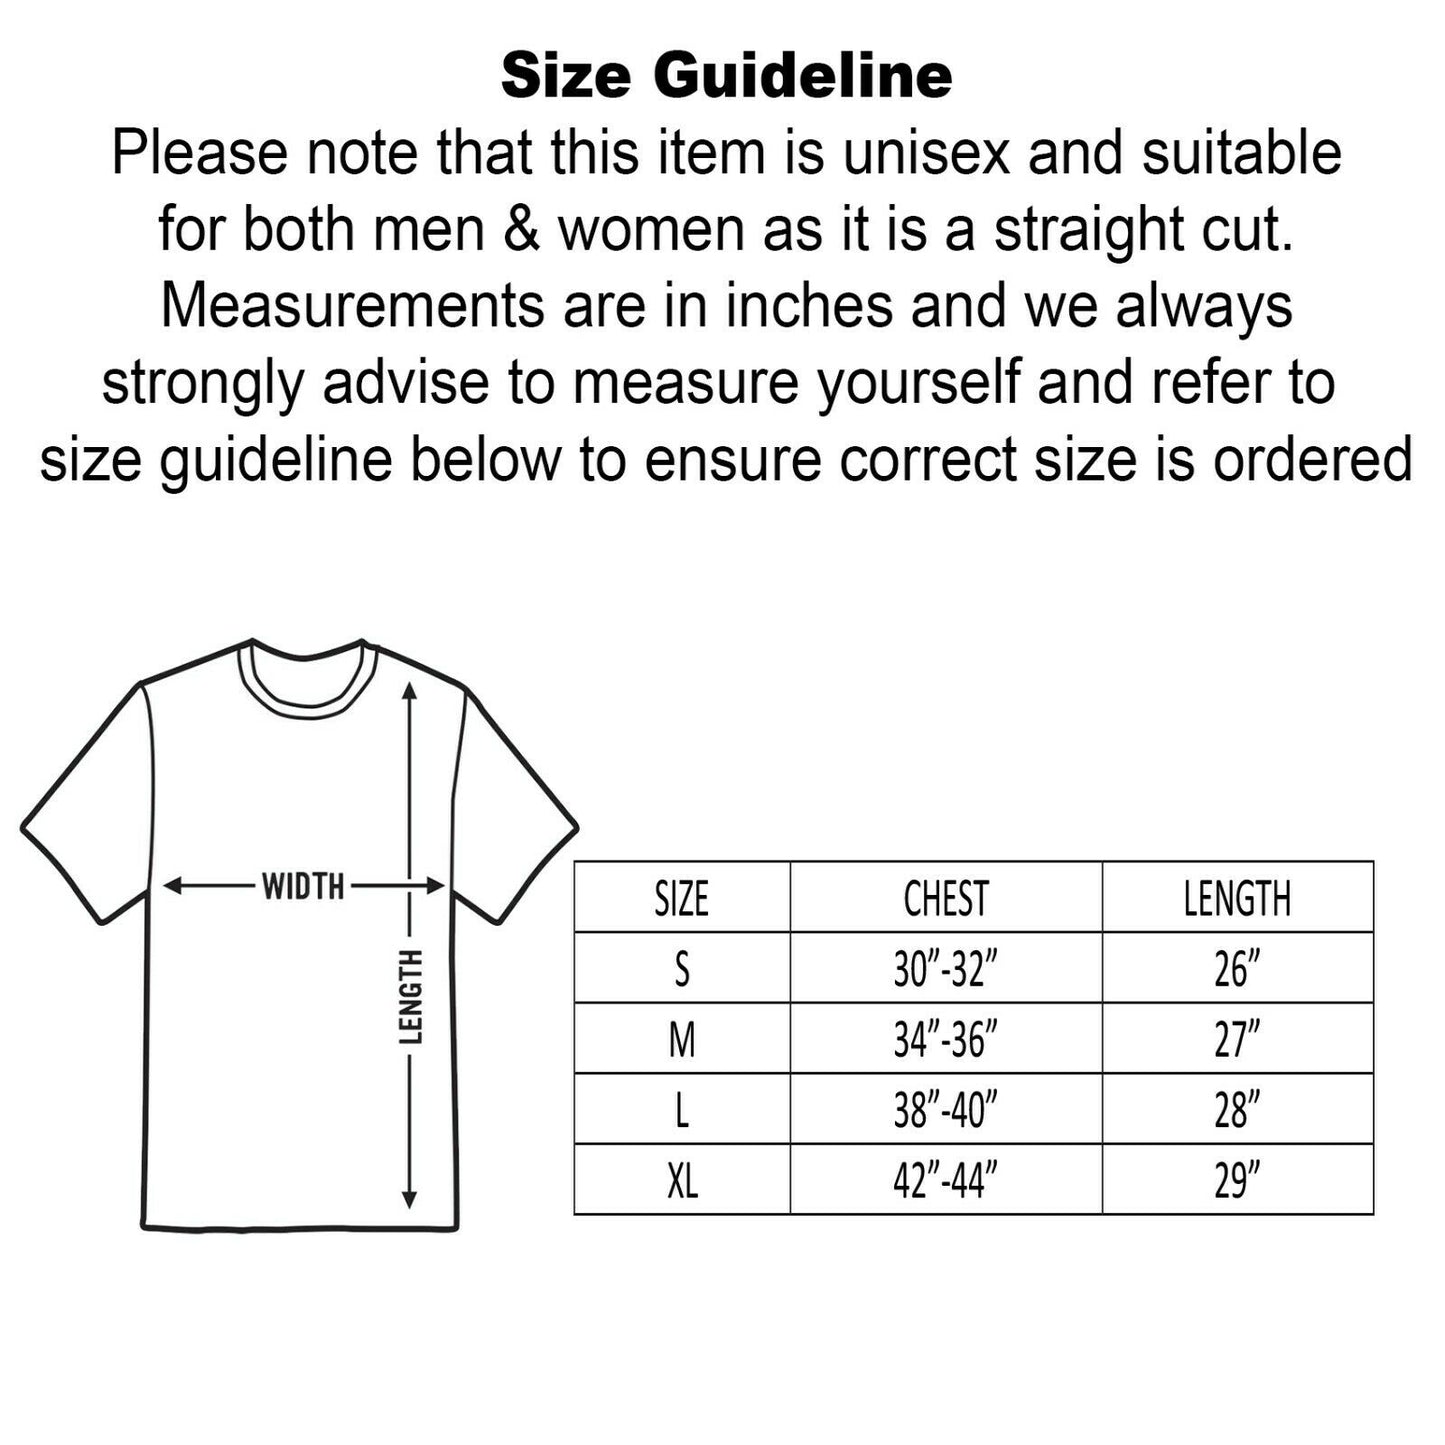 Unisex Lil Wayne 3/4 Sleeve Baseball T-Shirt